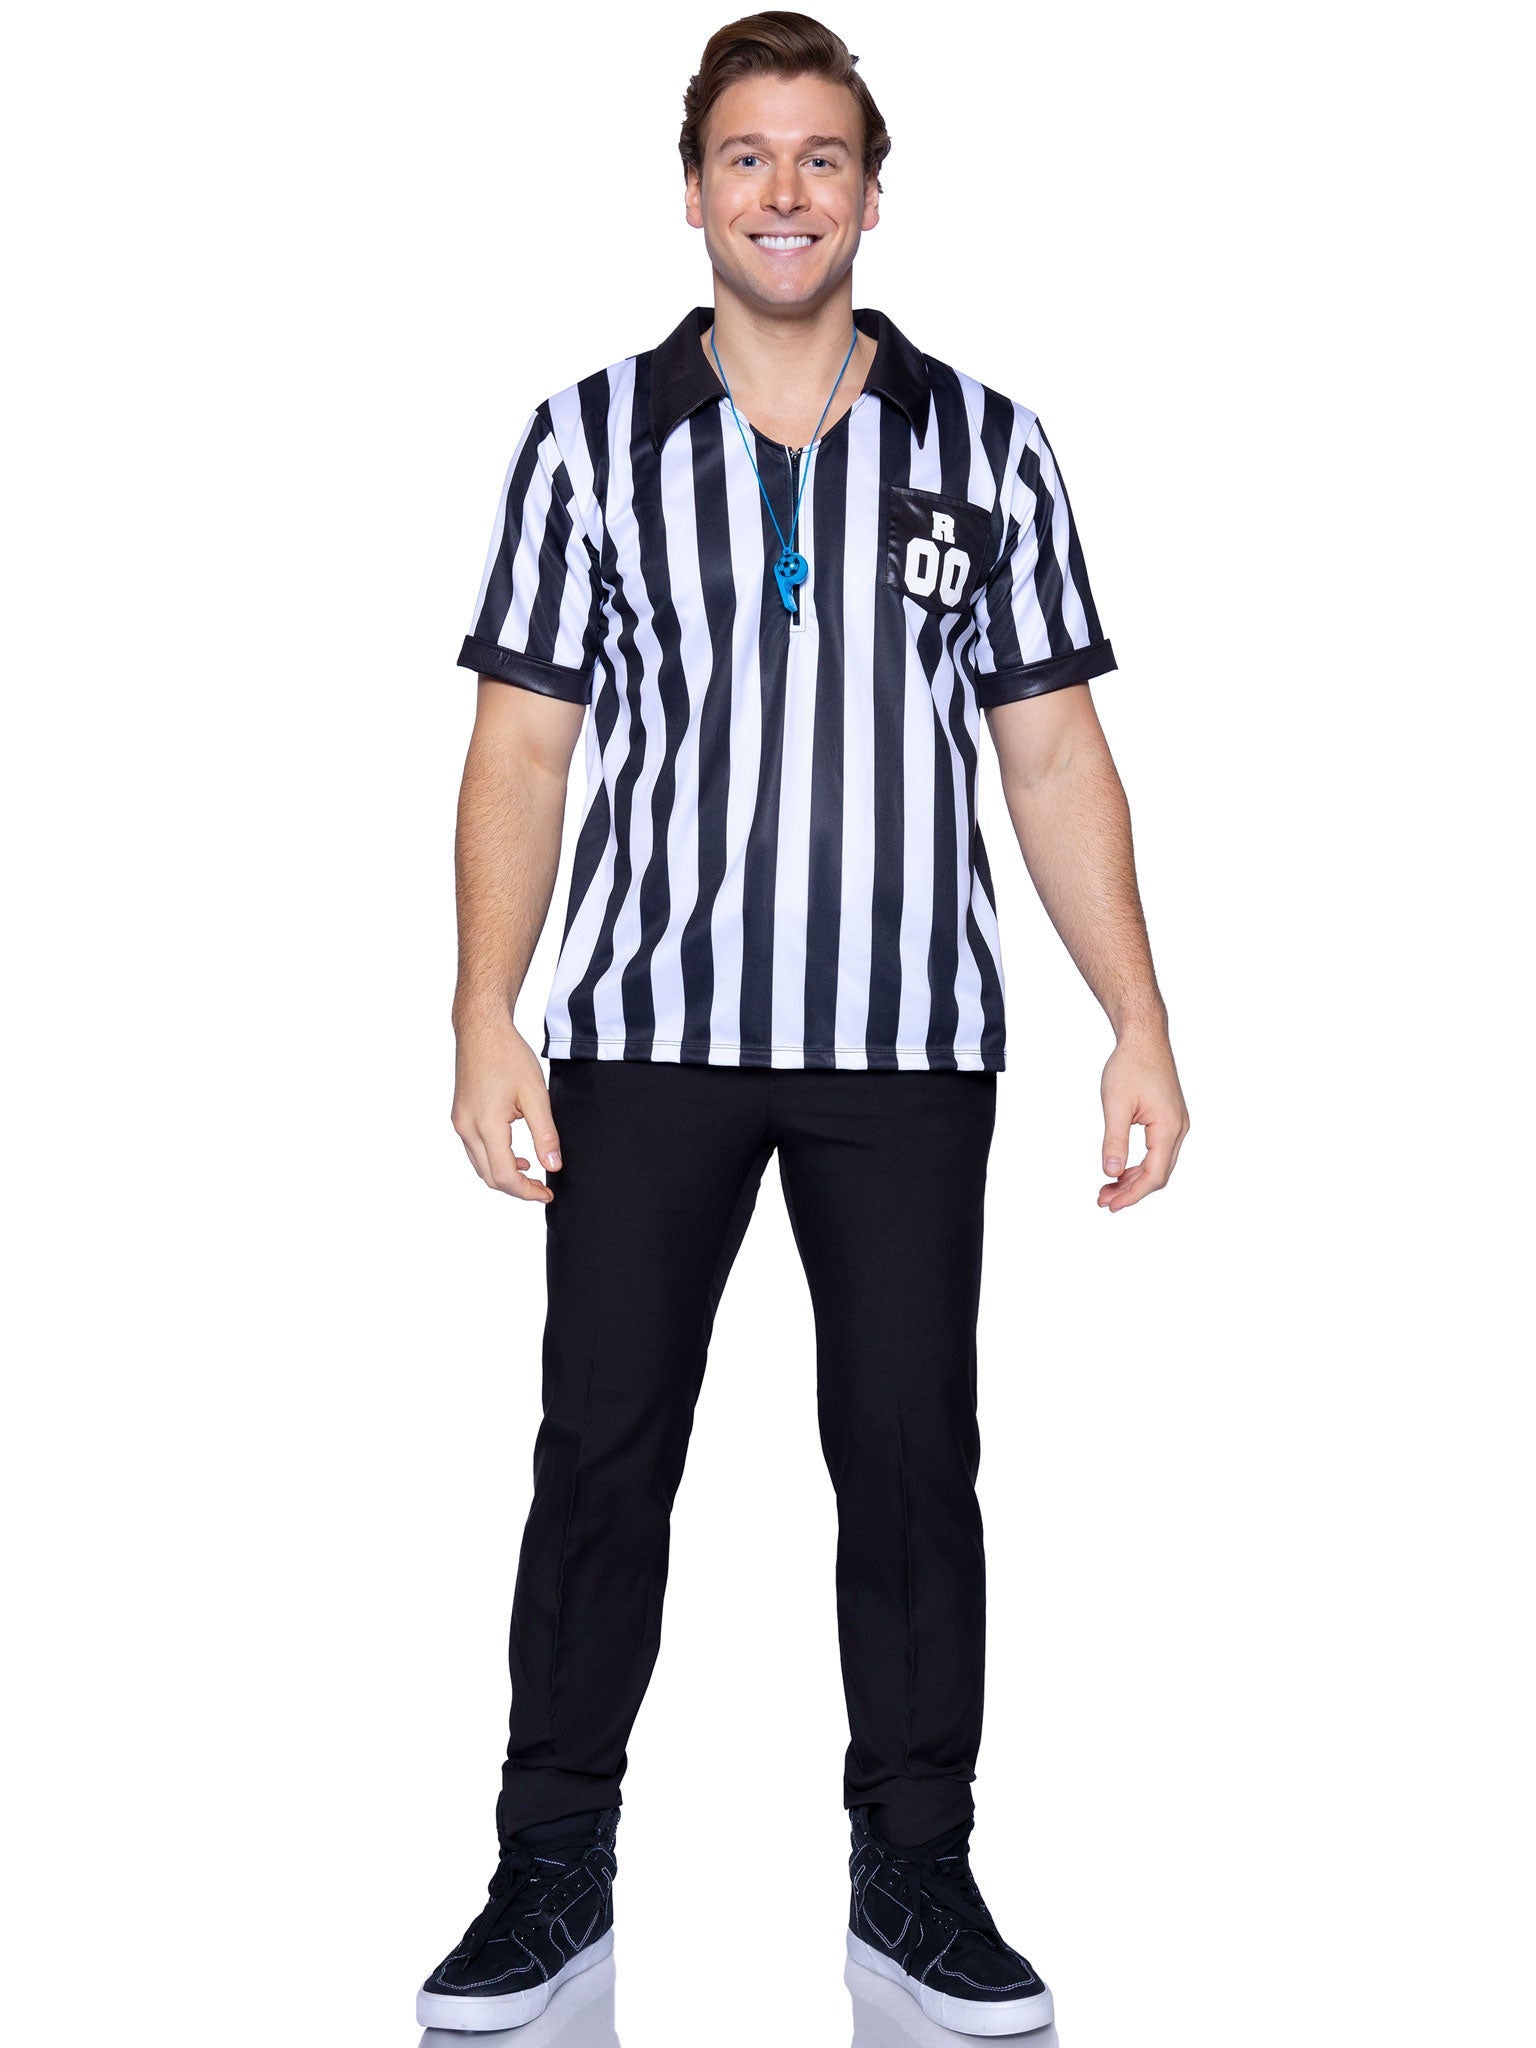 Men's Sports Referee Costume